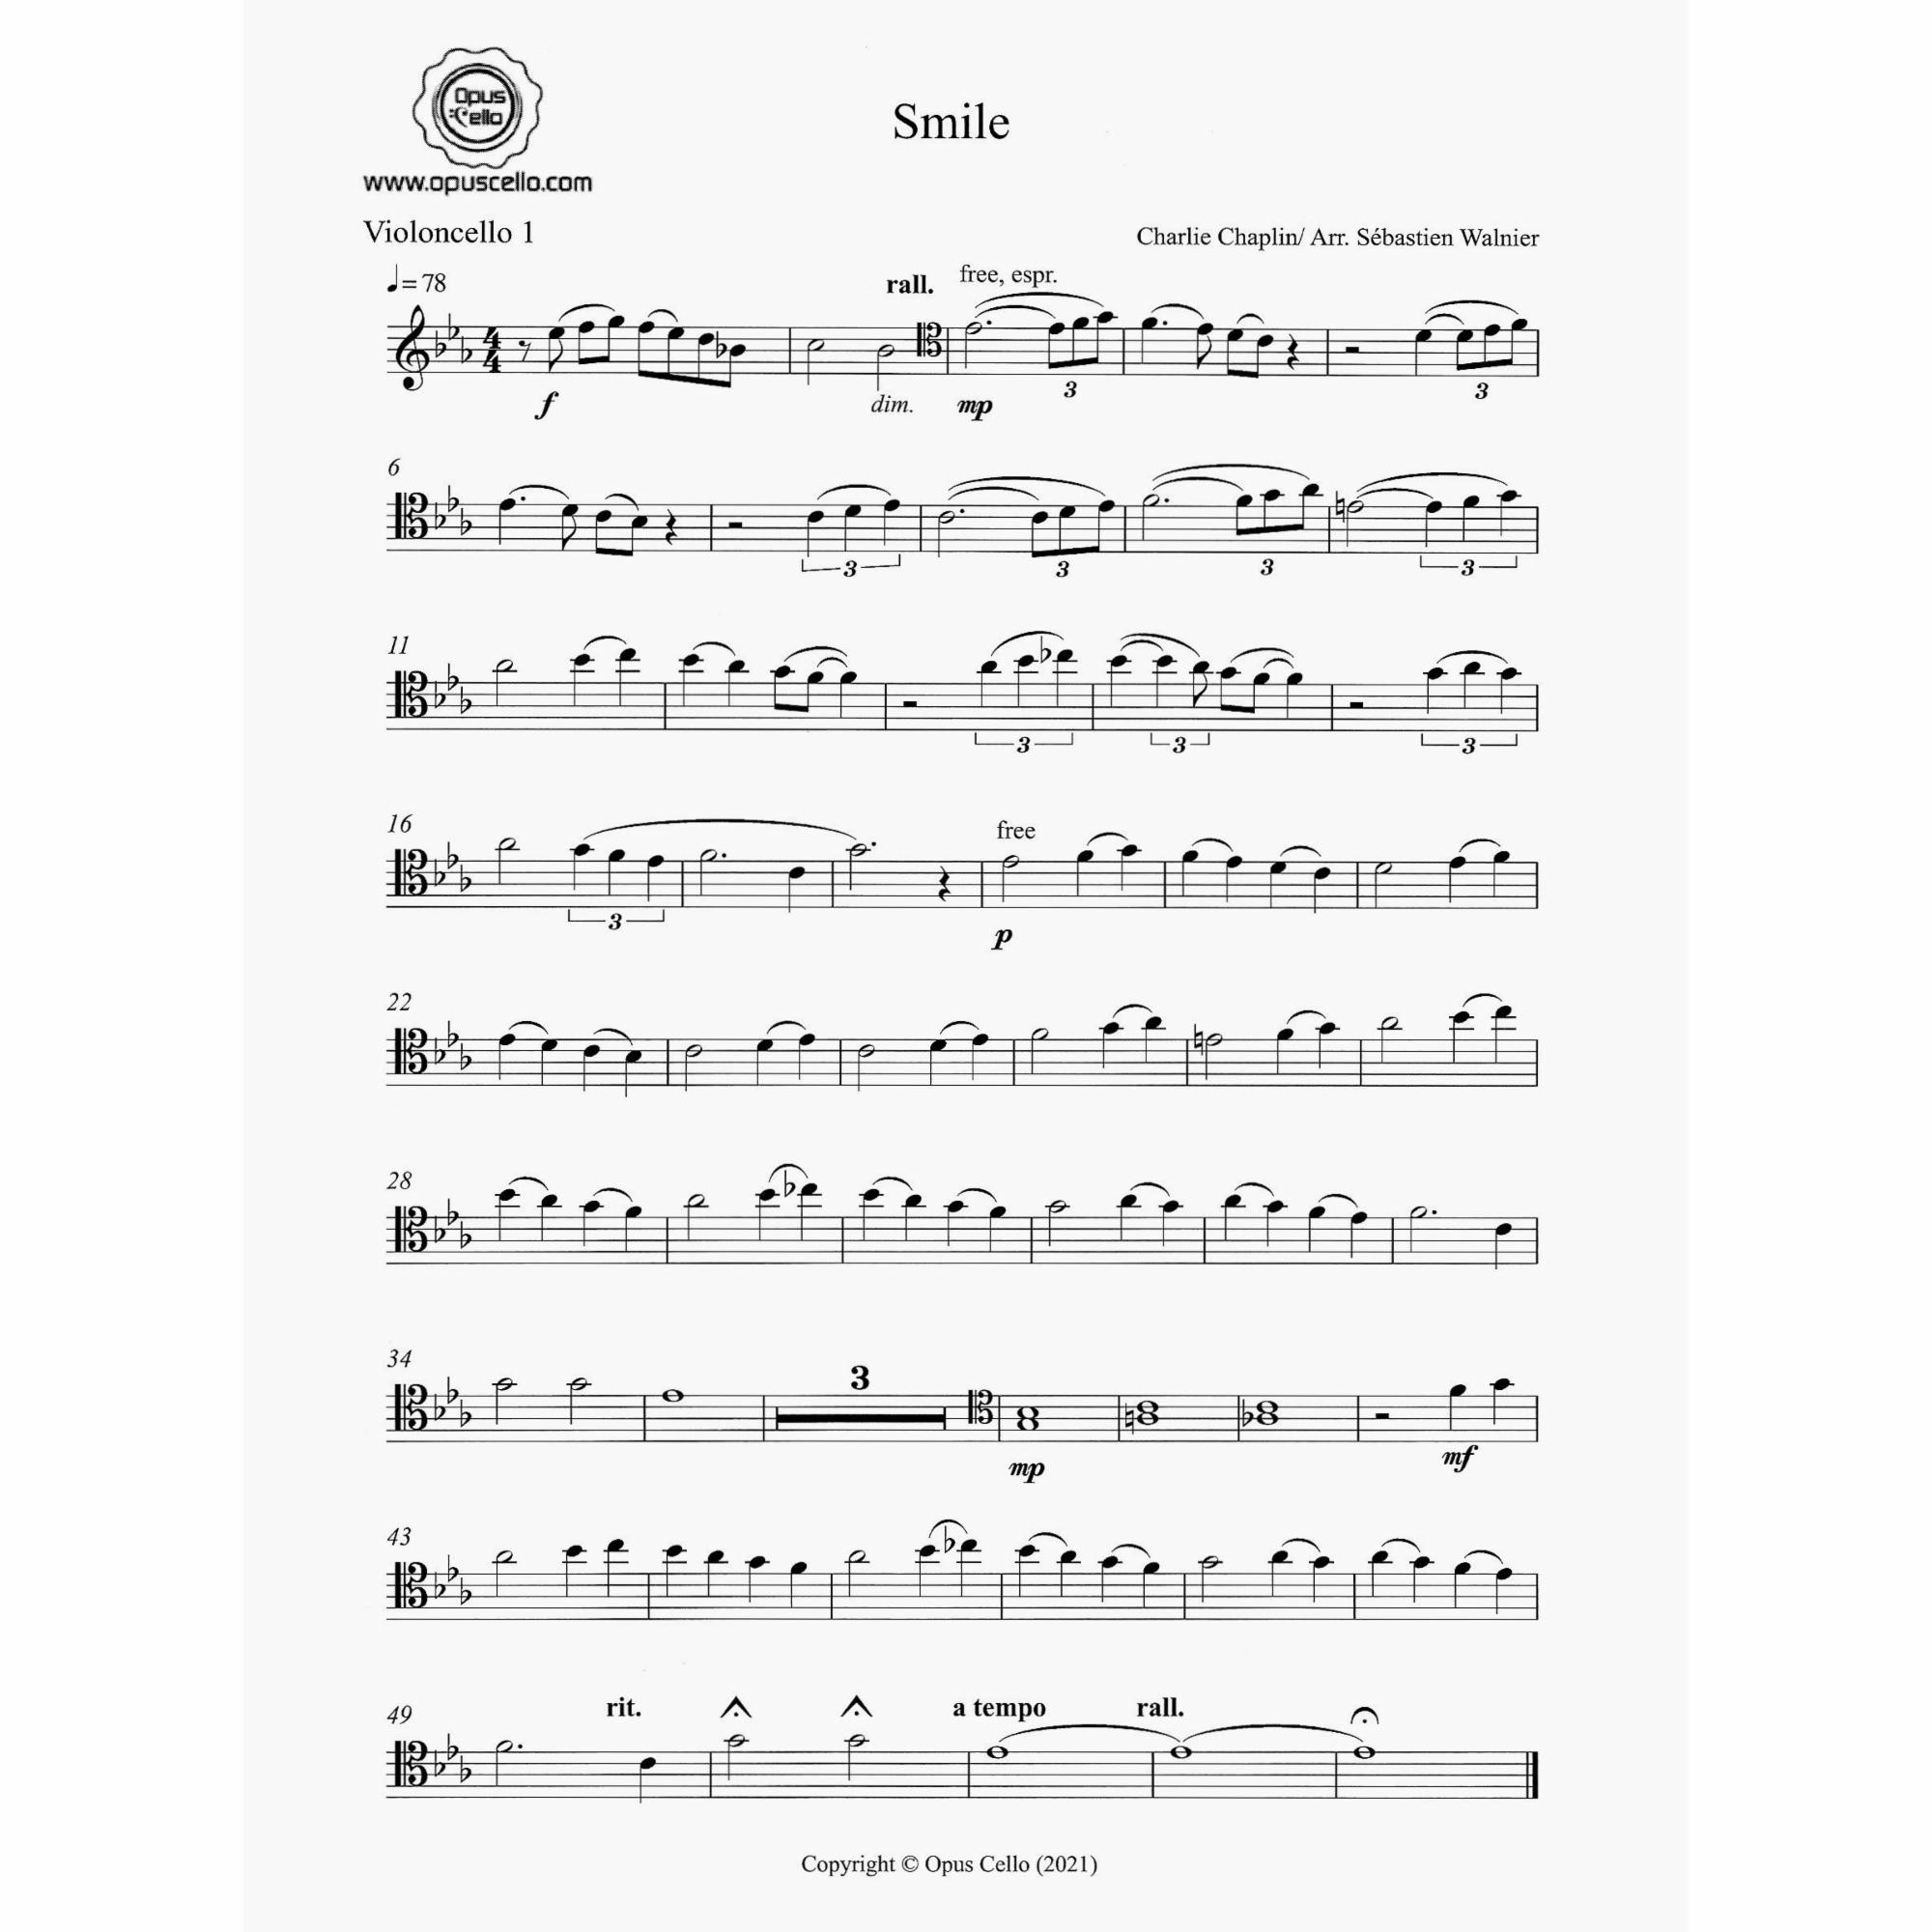 Sample: Five Cellos, Co. I Part